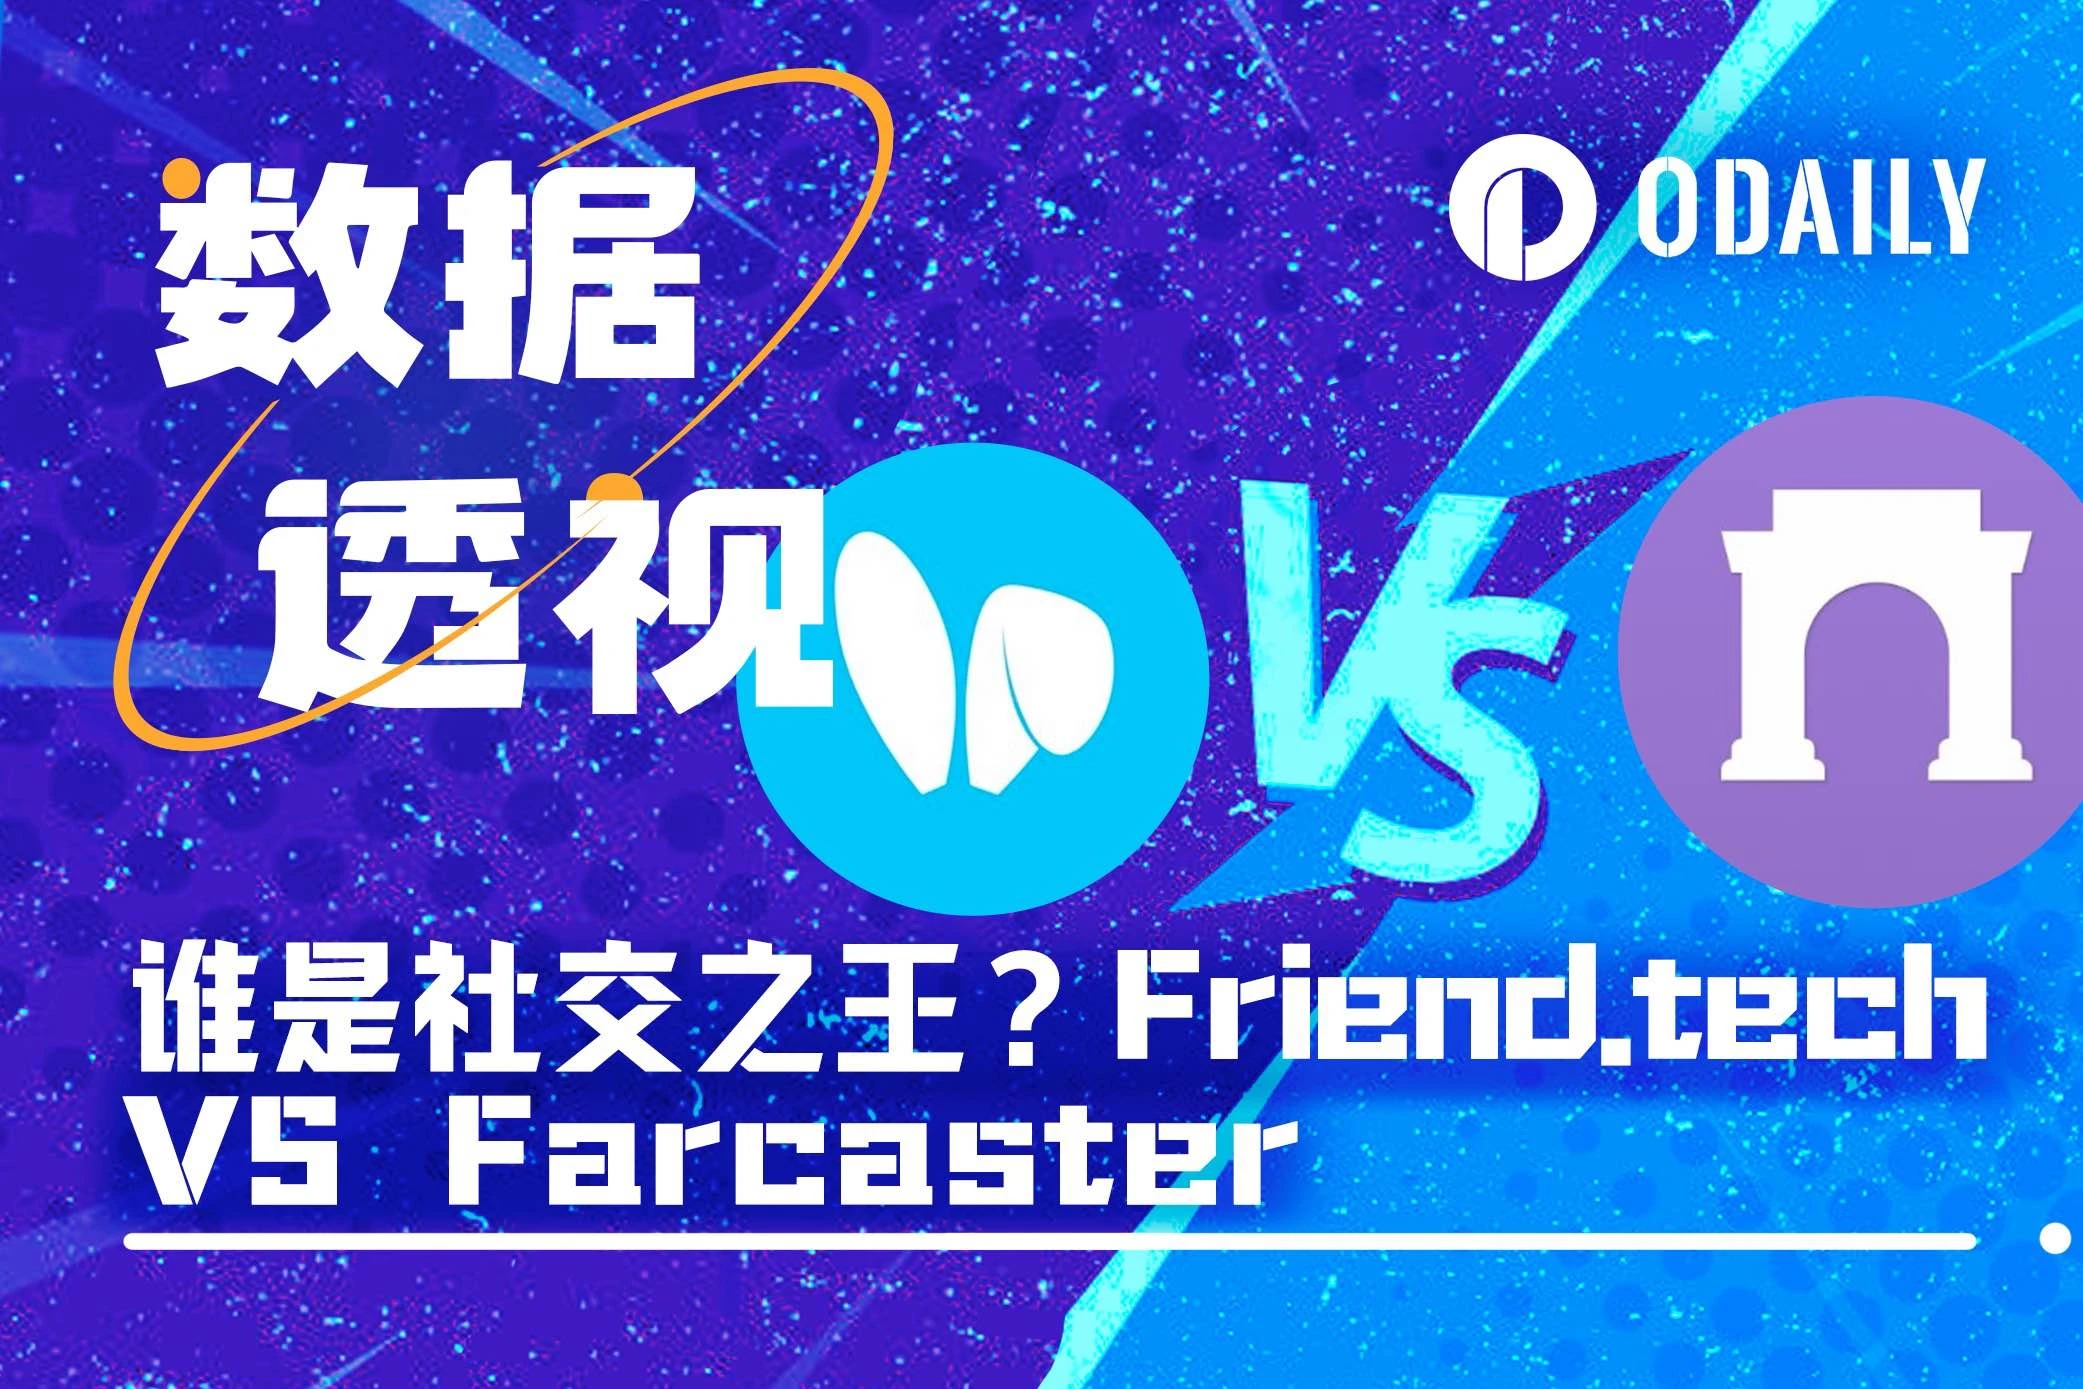 SocialFi data comparison: Friend.tech VS Farcaster, who is the social king?